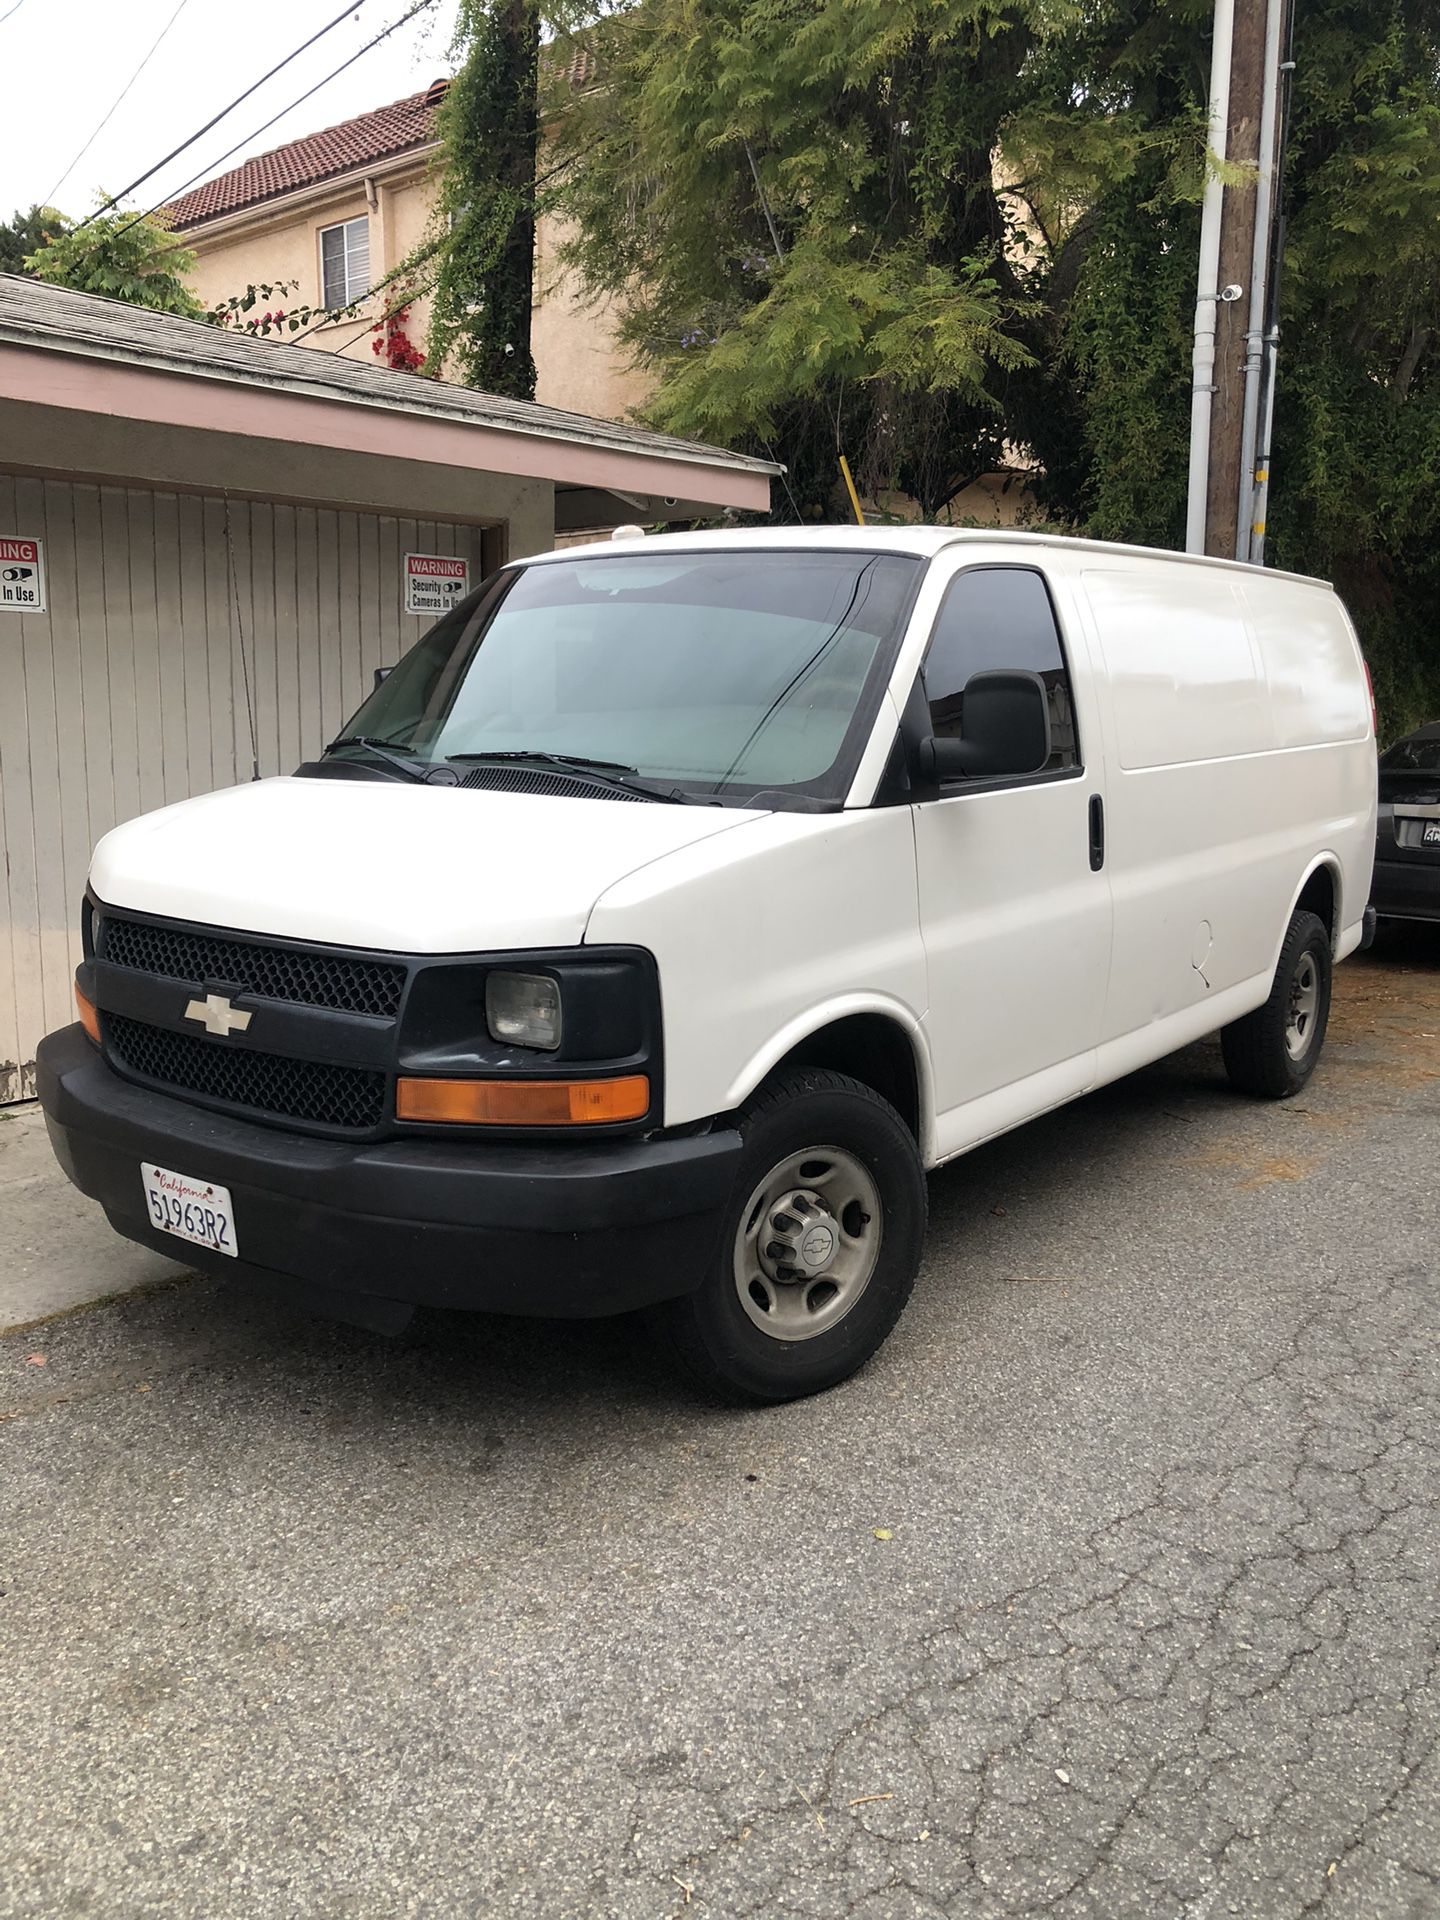 2006 Chevy Express 2500..    $2600 Clean Van